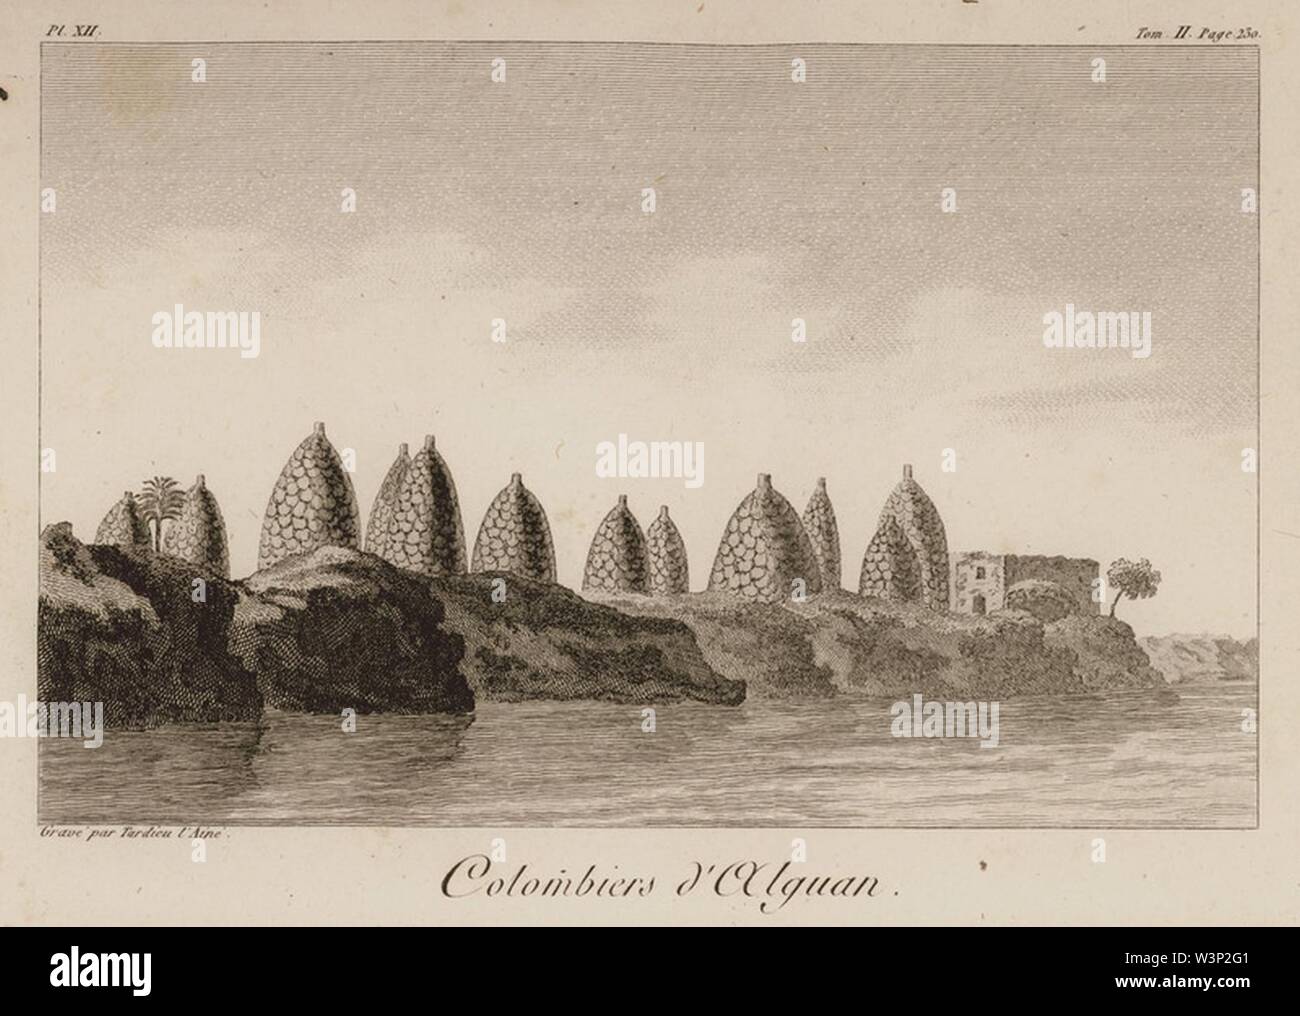 Colombiers d'Alguan - Sonnini De Manoncourt Charles Nicolas Sigisbert - 1799. Stock Photo